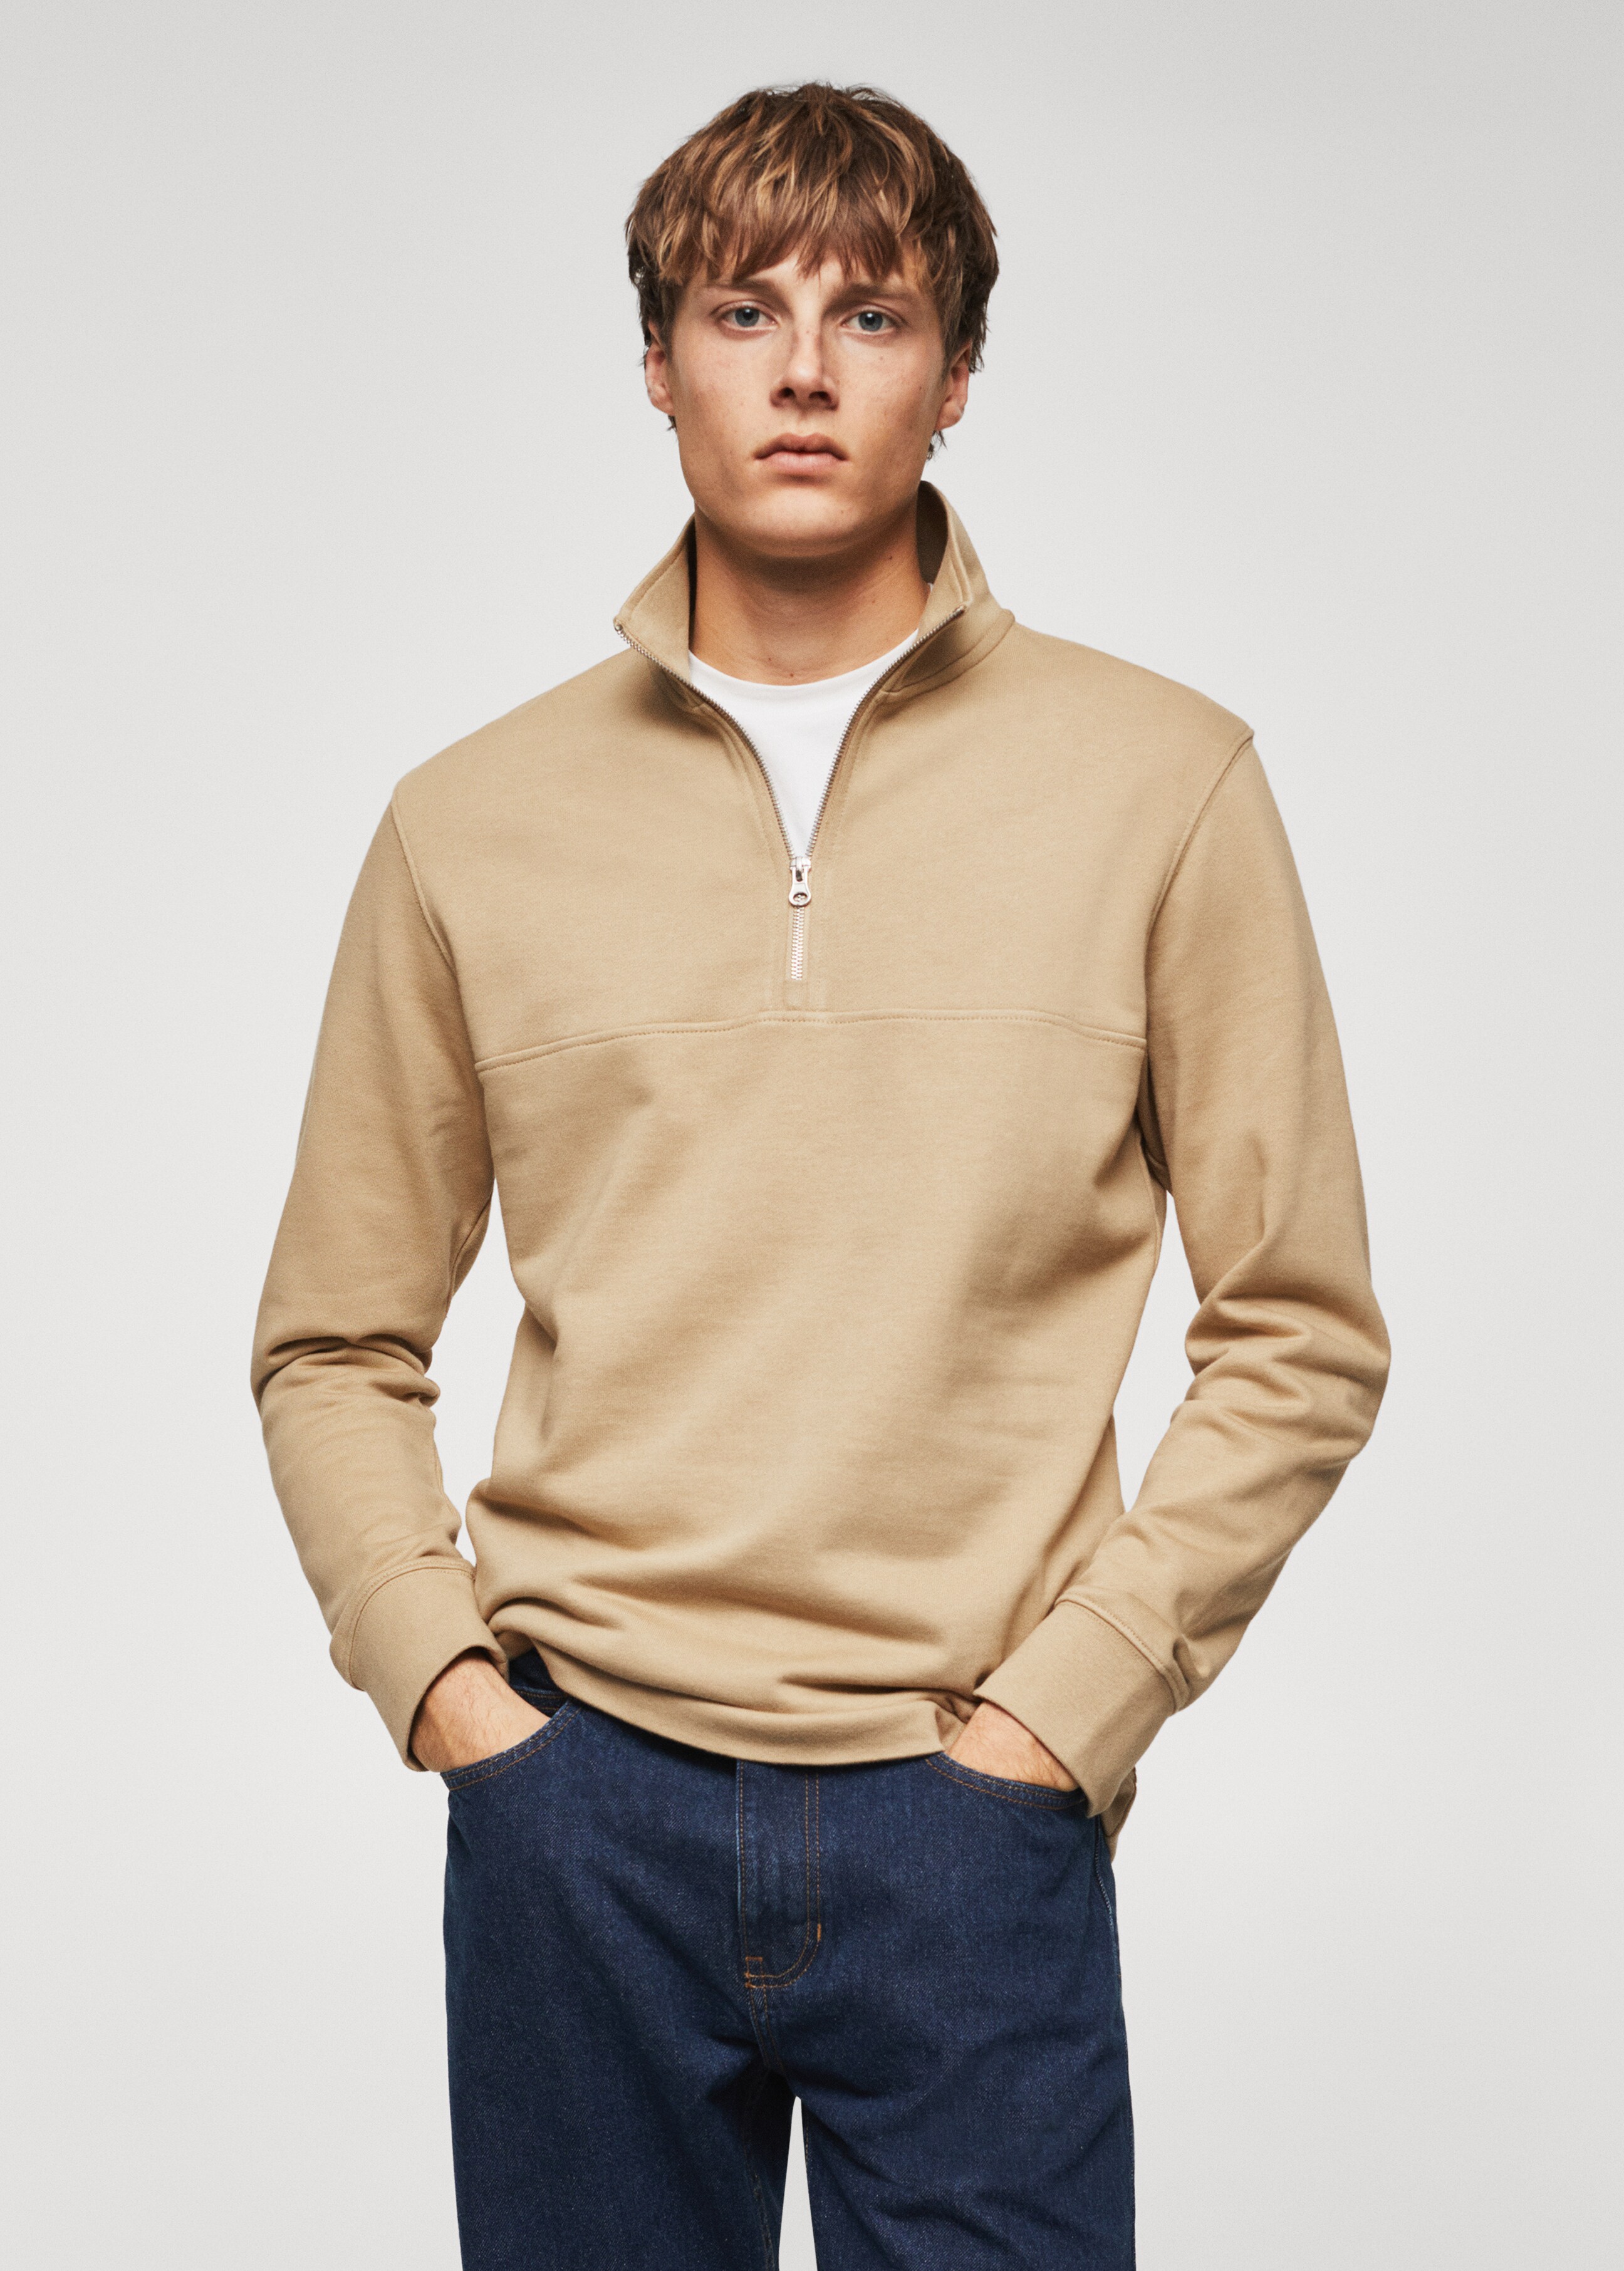 Cotton sweatshirt with zip neck - Medium plane